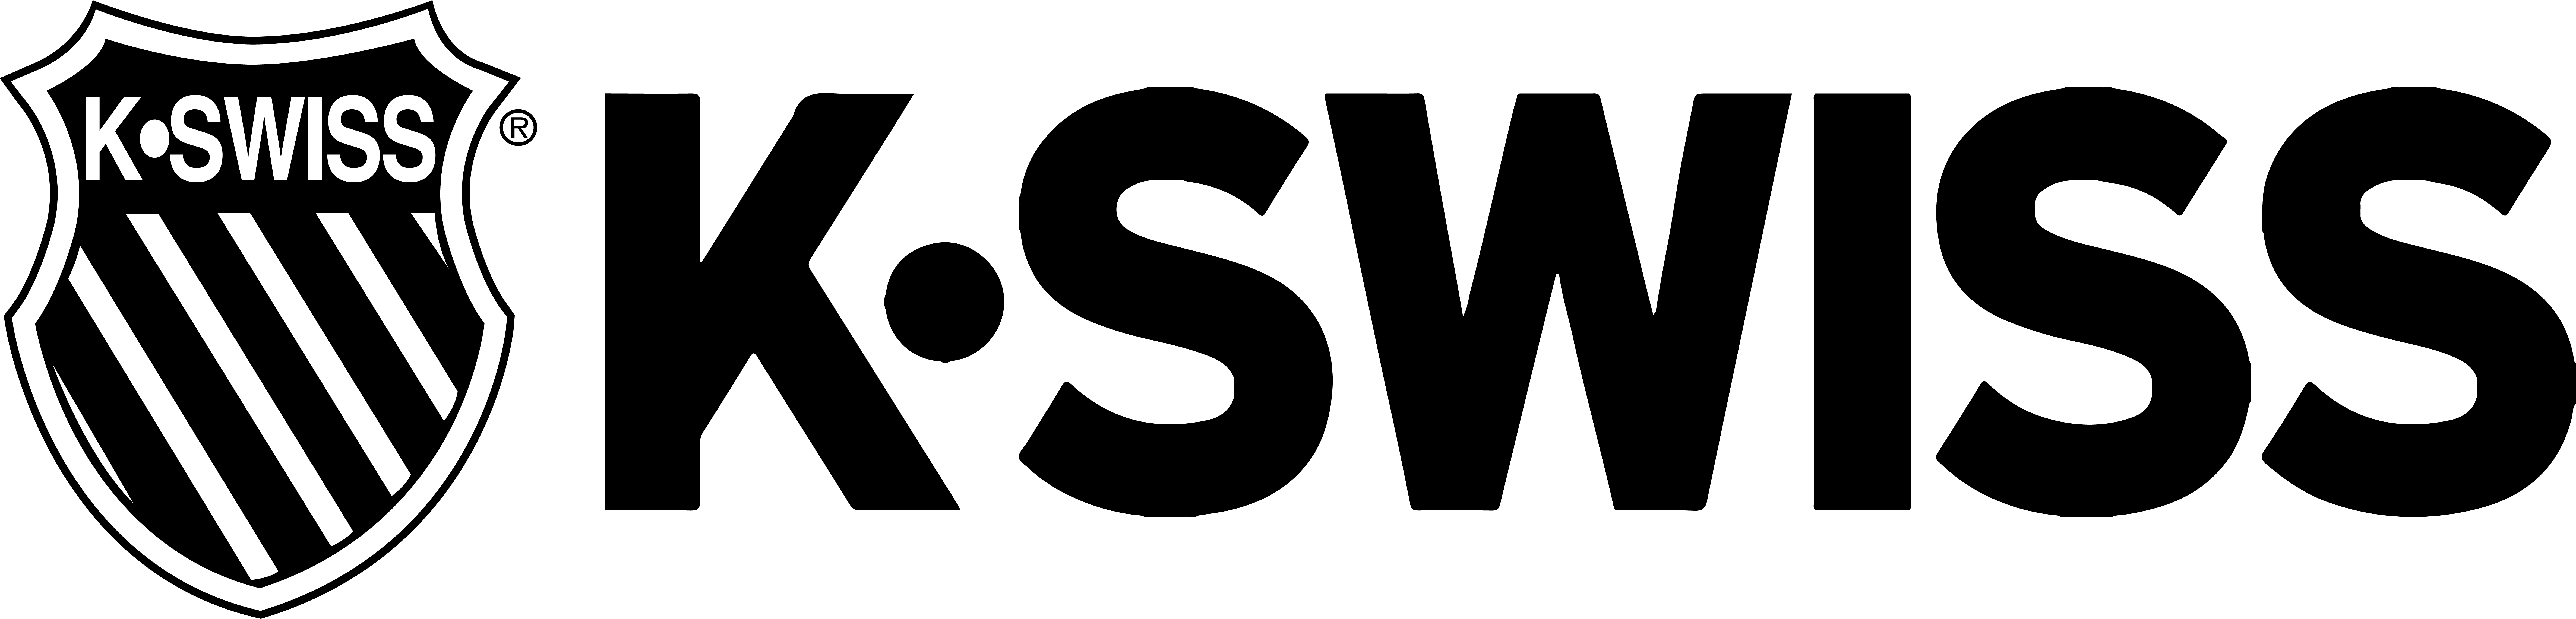 Kswiss logo